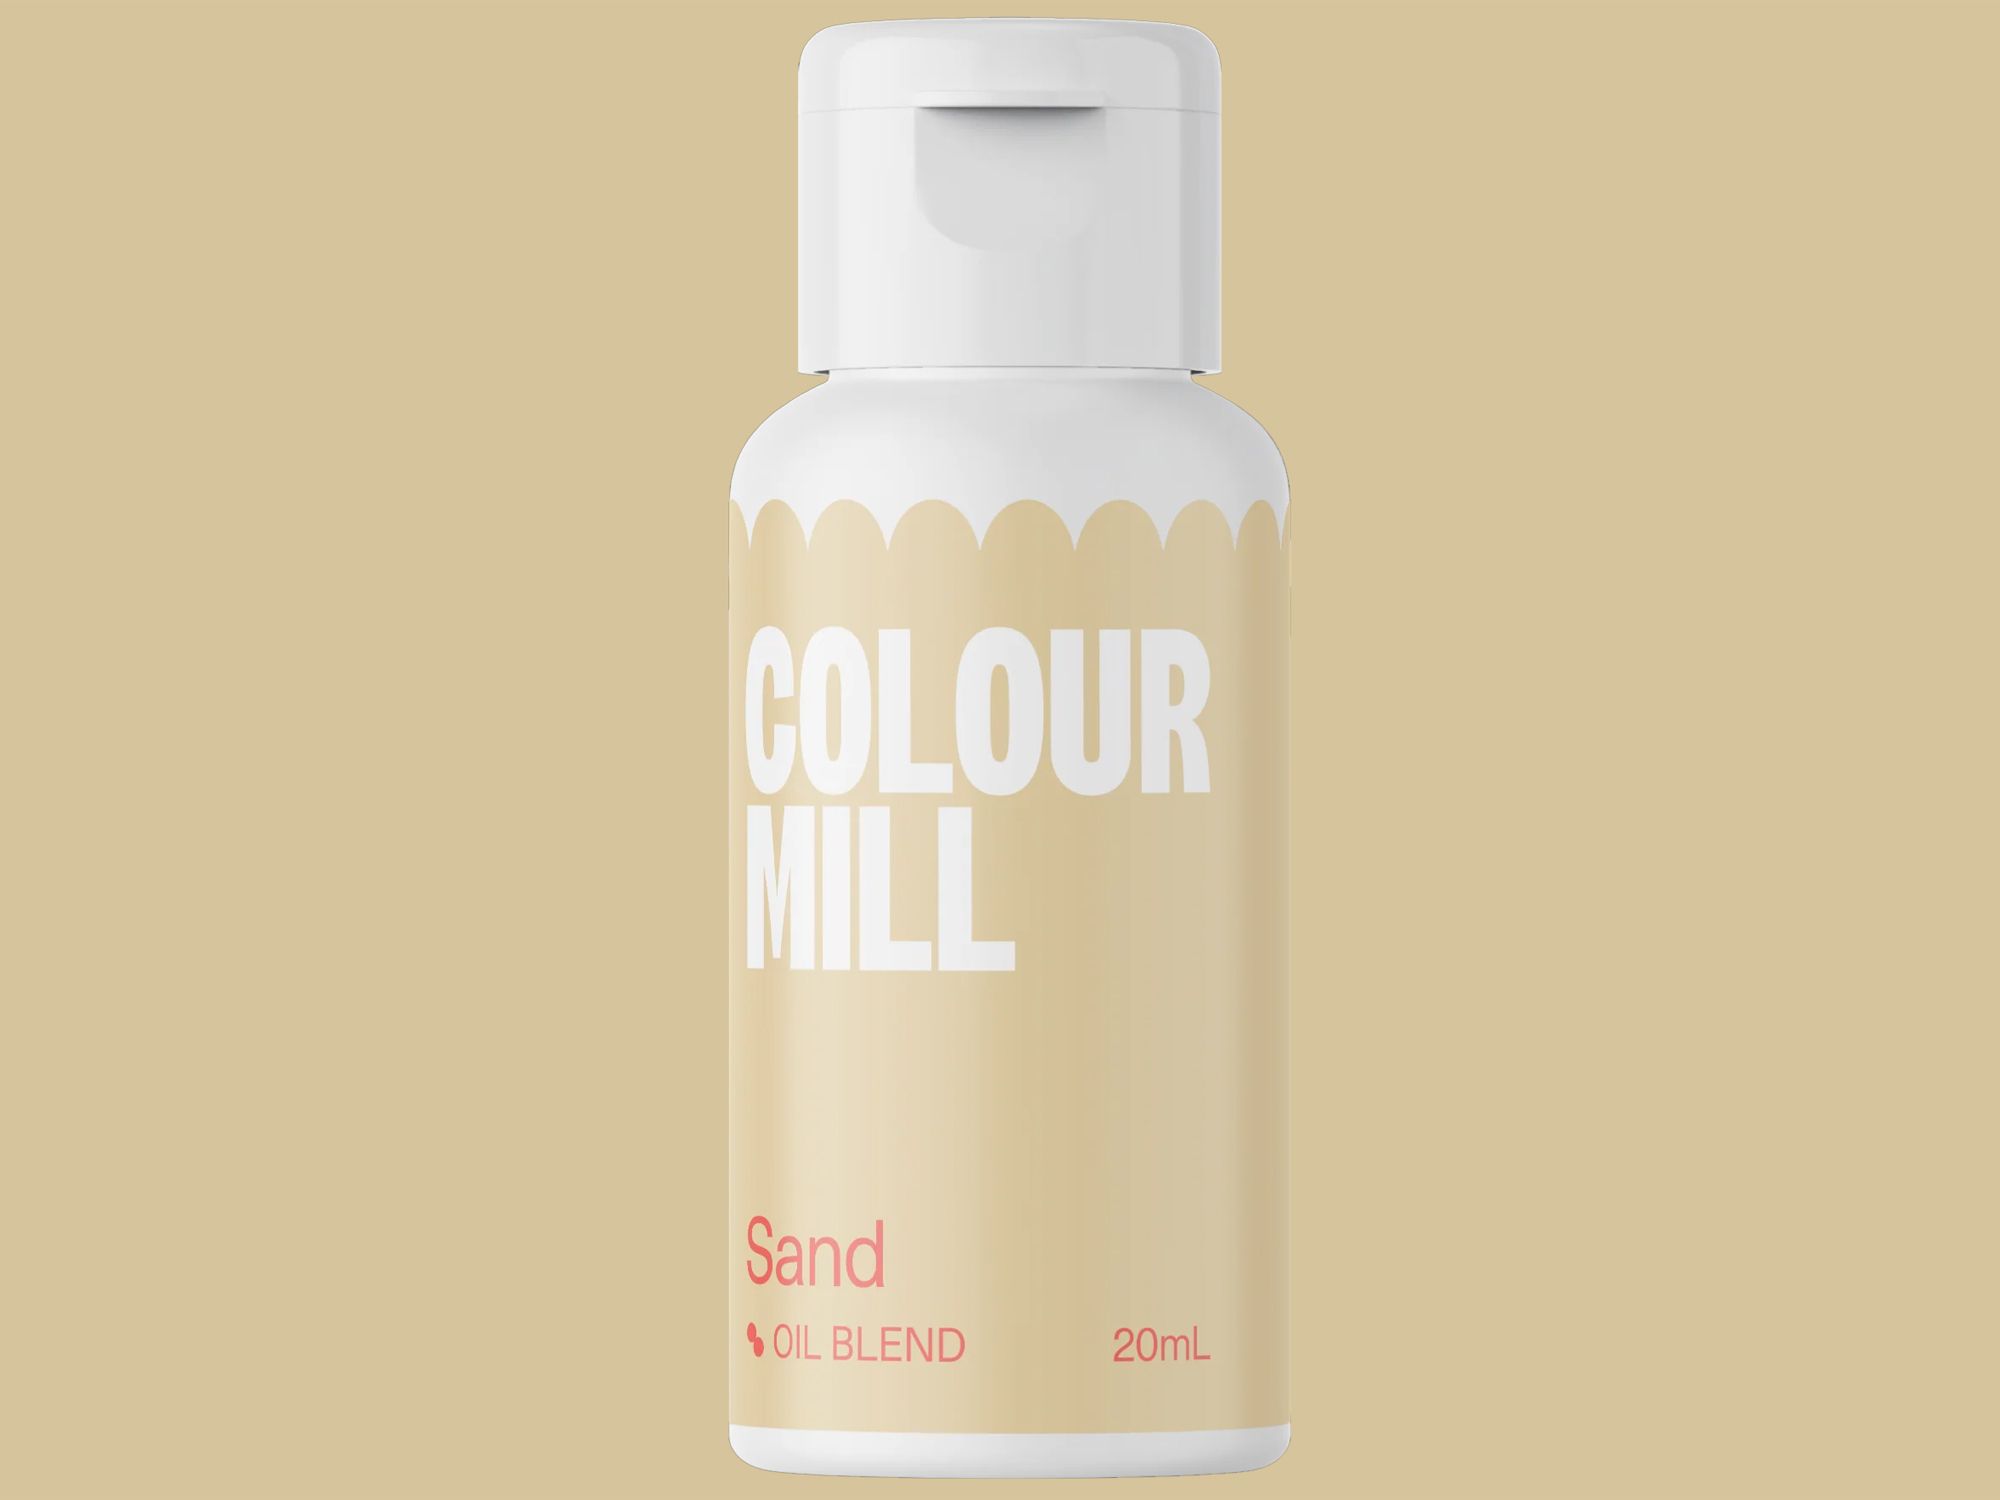 Colour Mill Sand (Oil Blend) 20ml